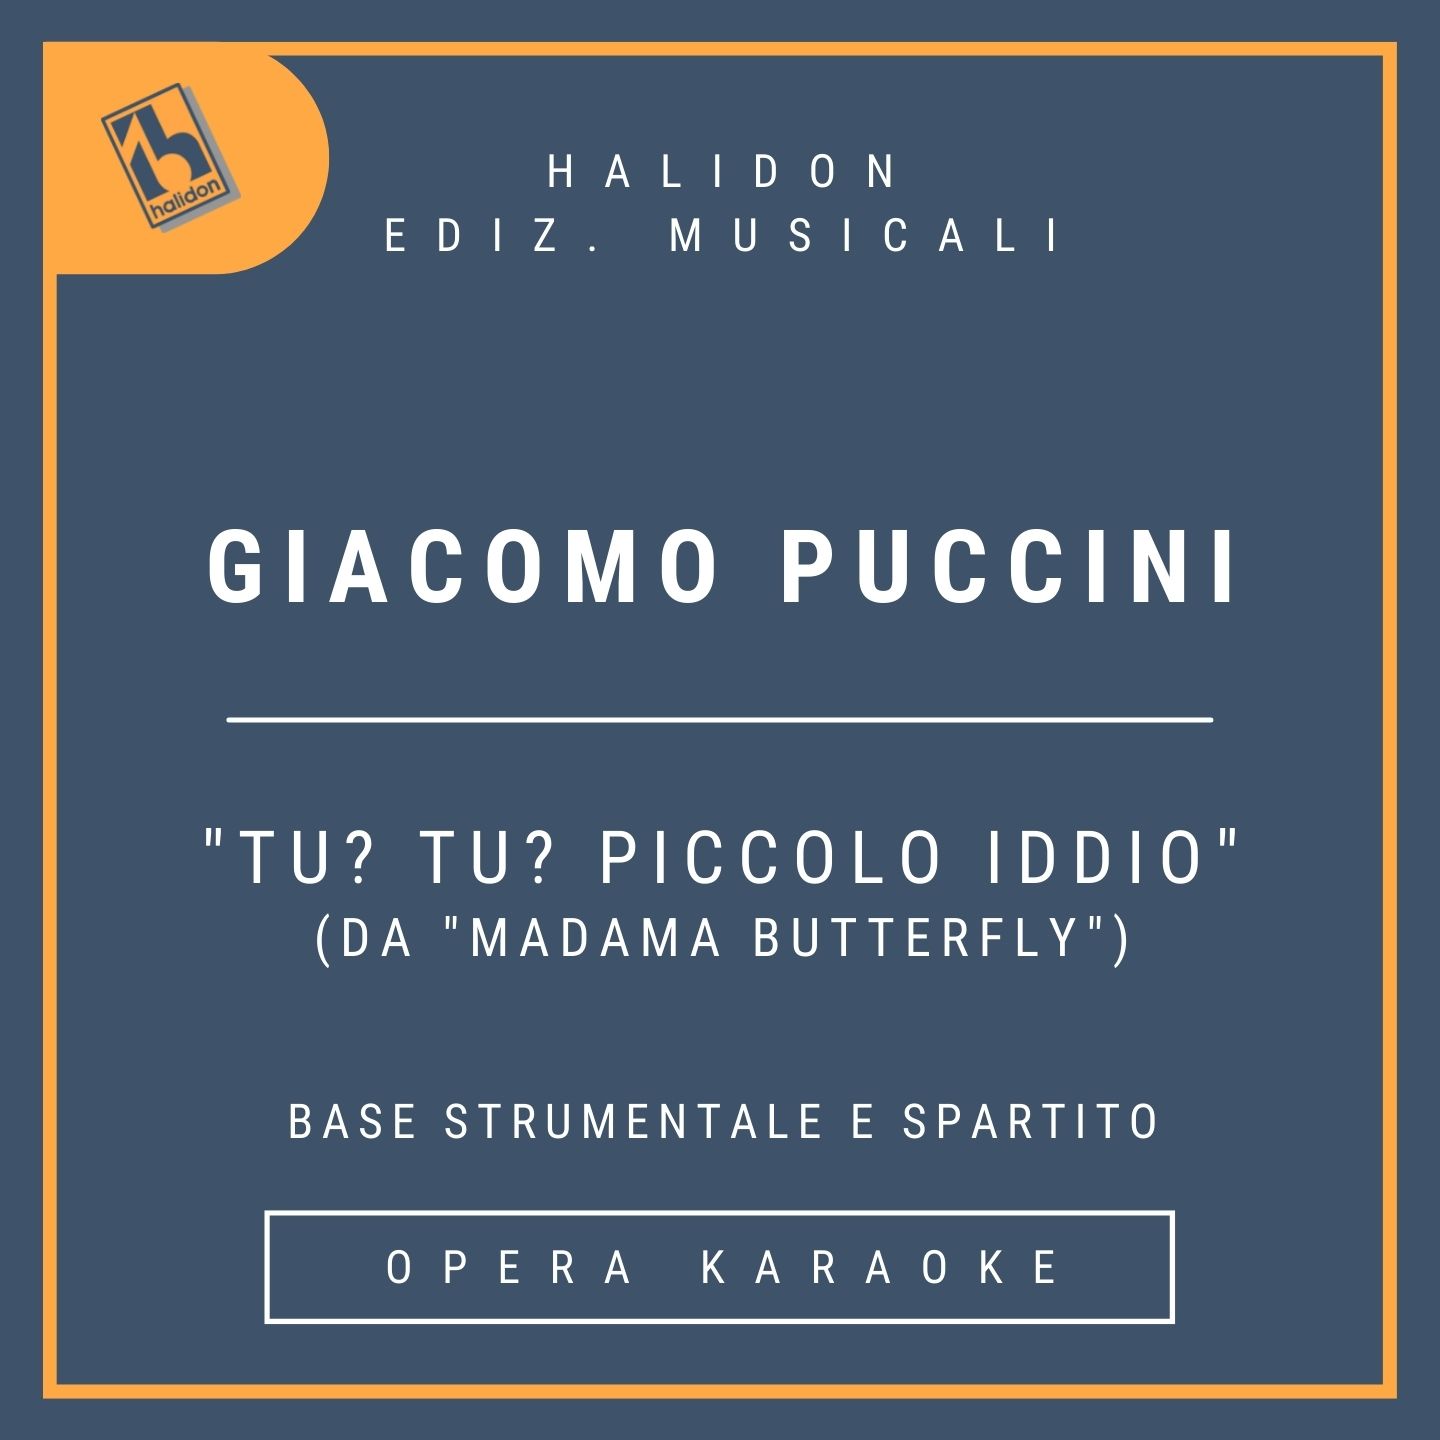 Giacomo Puccini - Tu? Tu? Piccolo Iddio (from 'Madama Butterfly') - Cio-Cio-San Aria (dramatic soprano) - Instrumental track + sheet